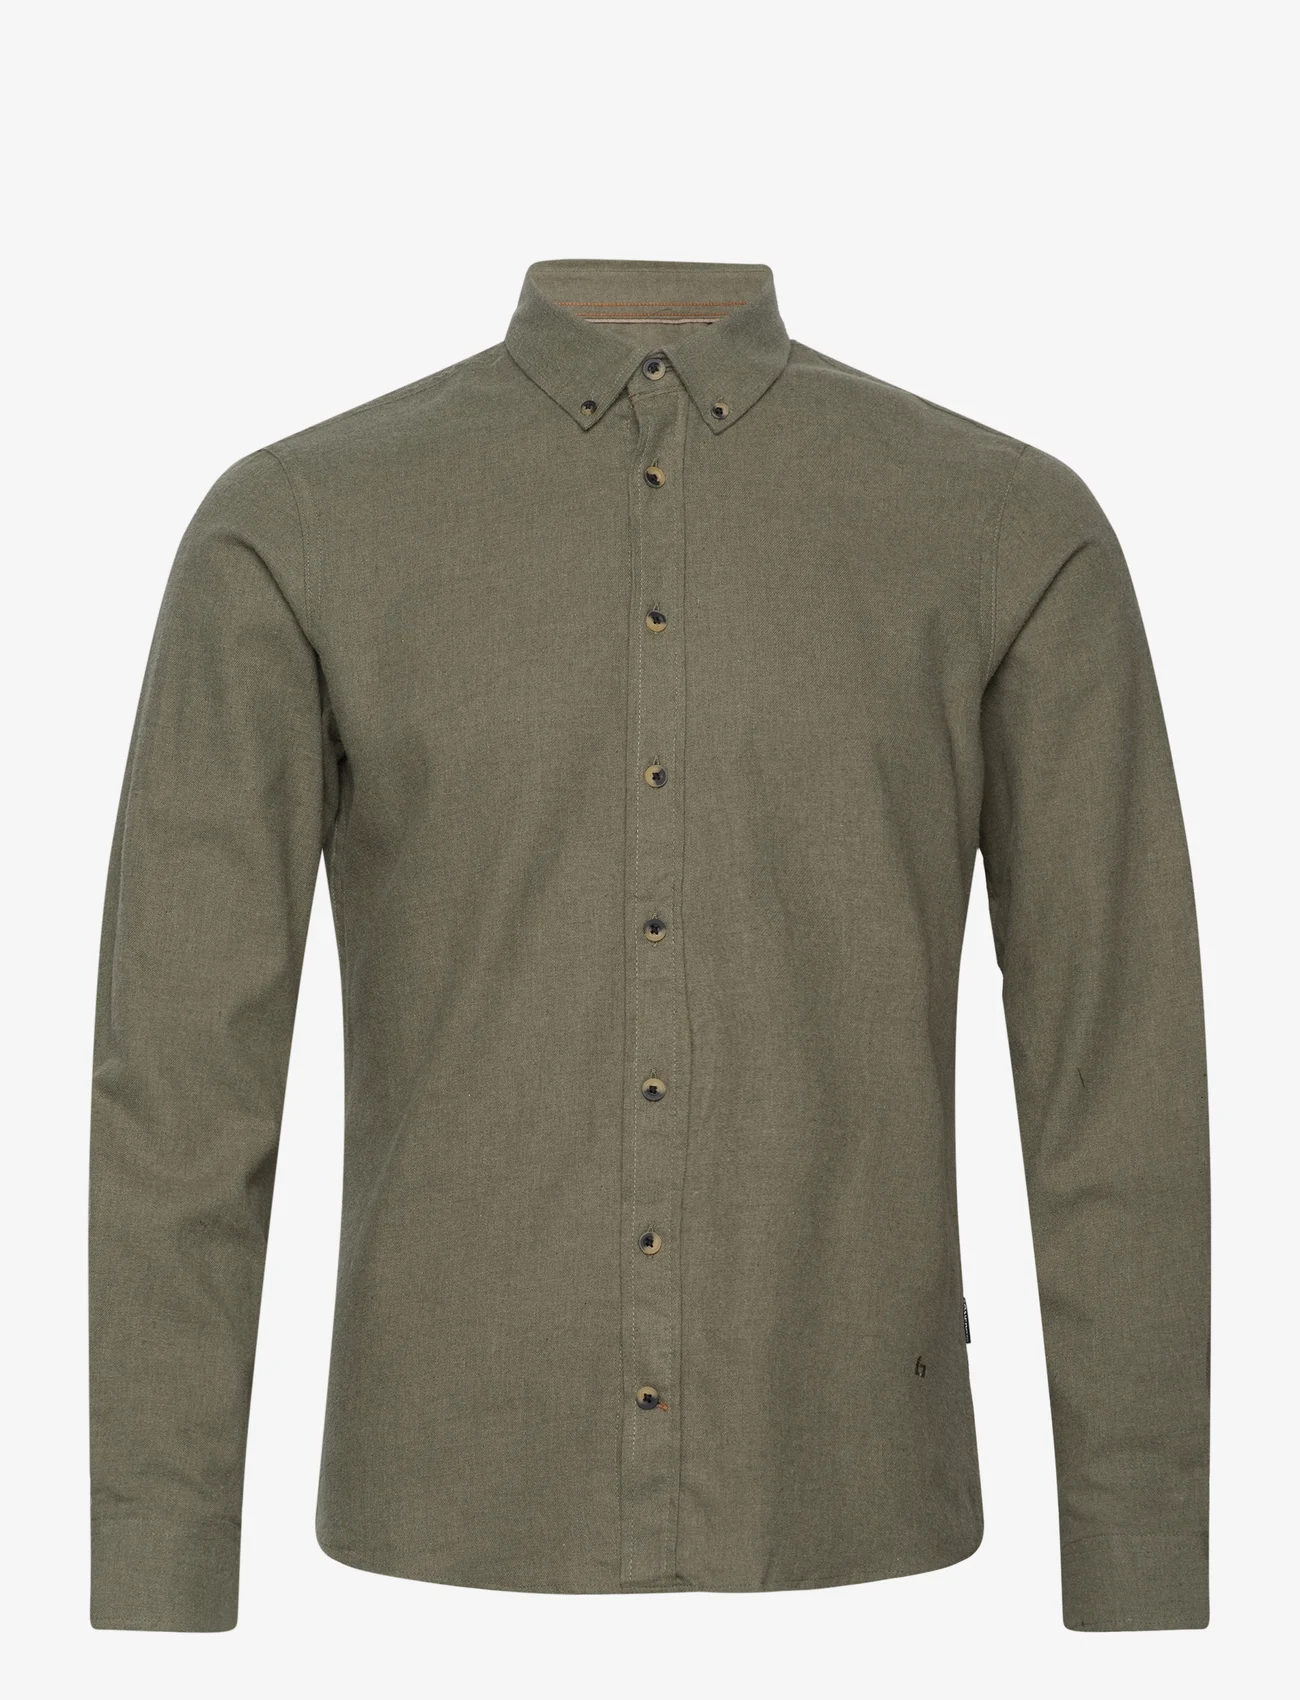 Blend - BHBURLEY shirt - laveste priser - winter moss - 0